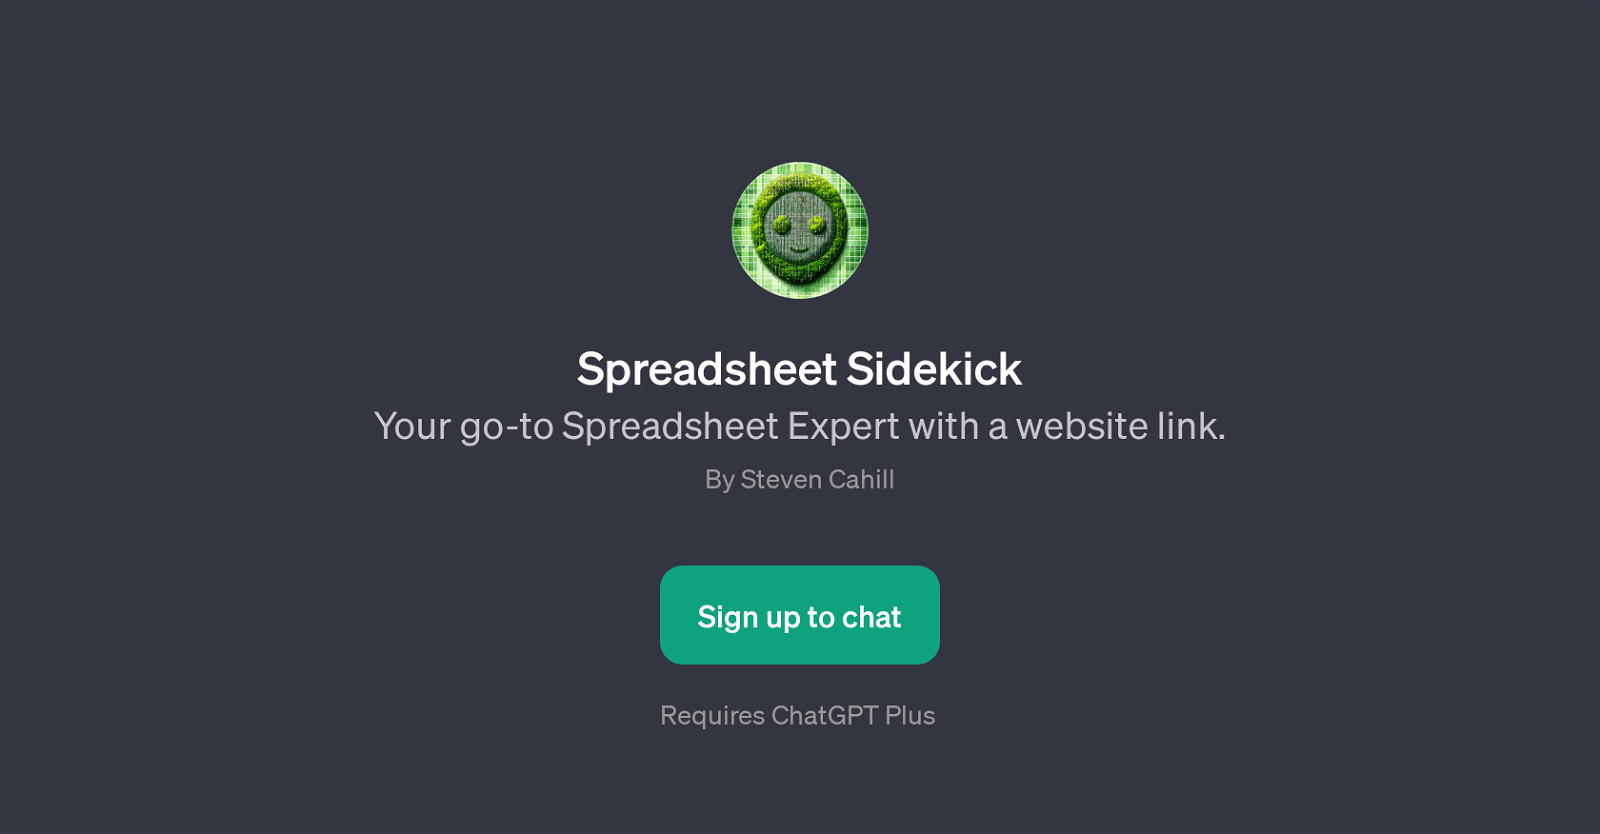 Spreadsheet Sidekick website